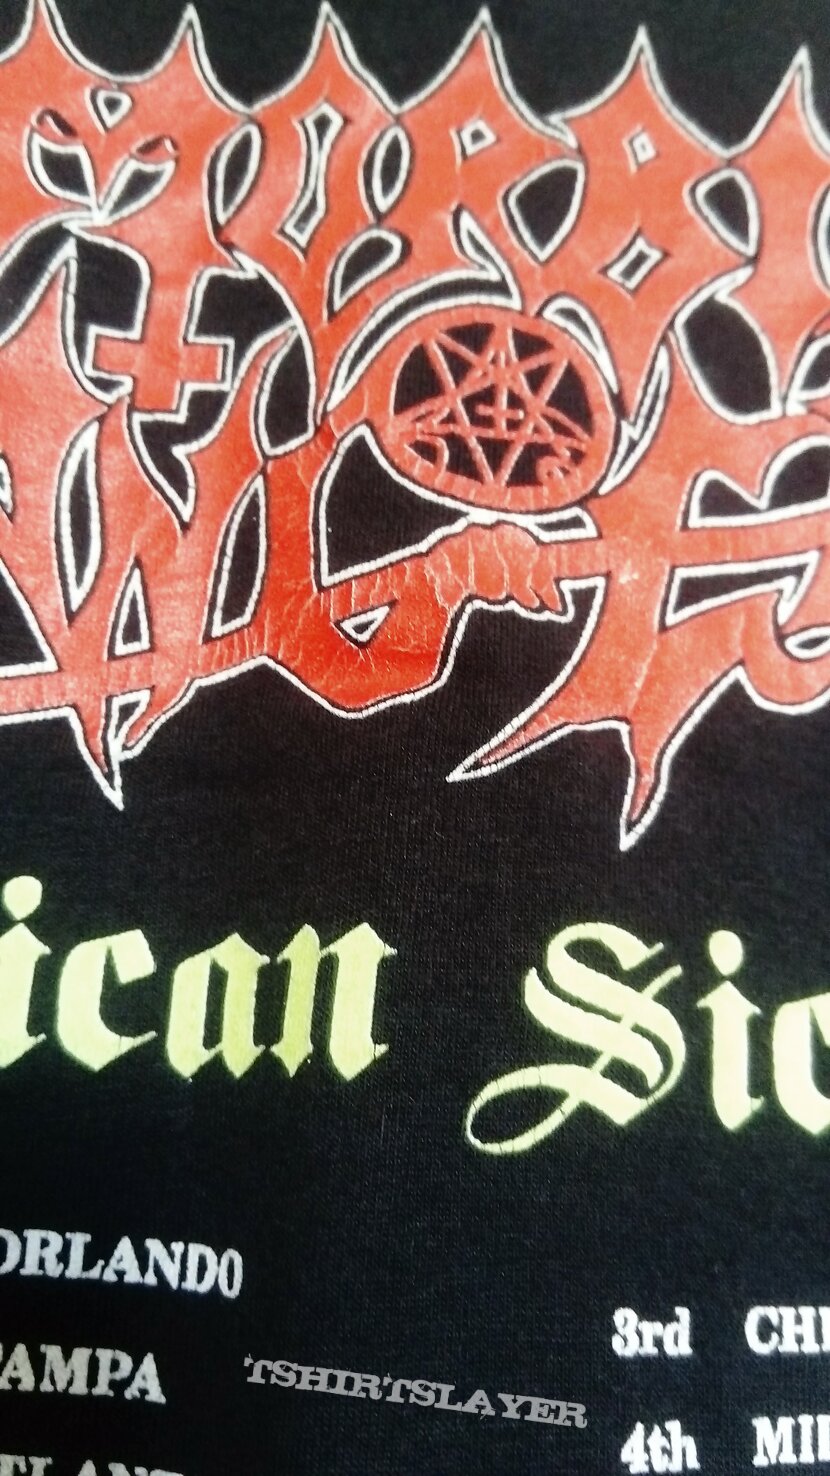 Morbid Angel - American Sickness 1991 Tour